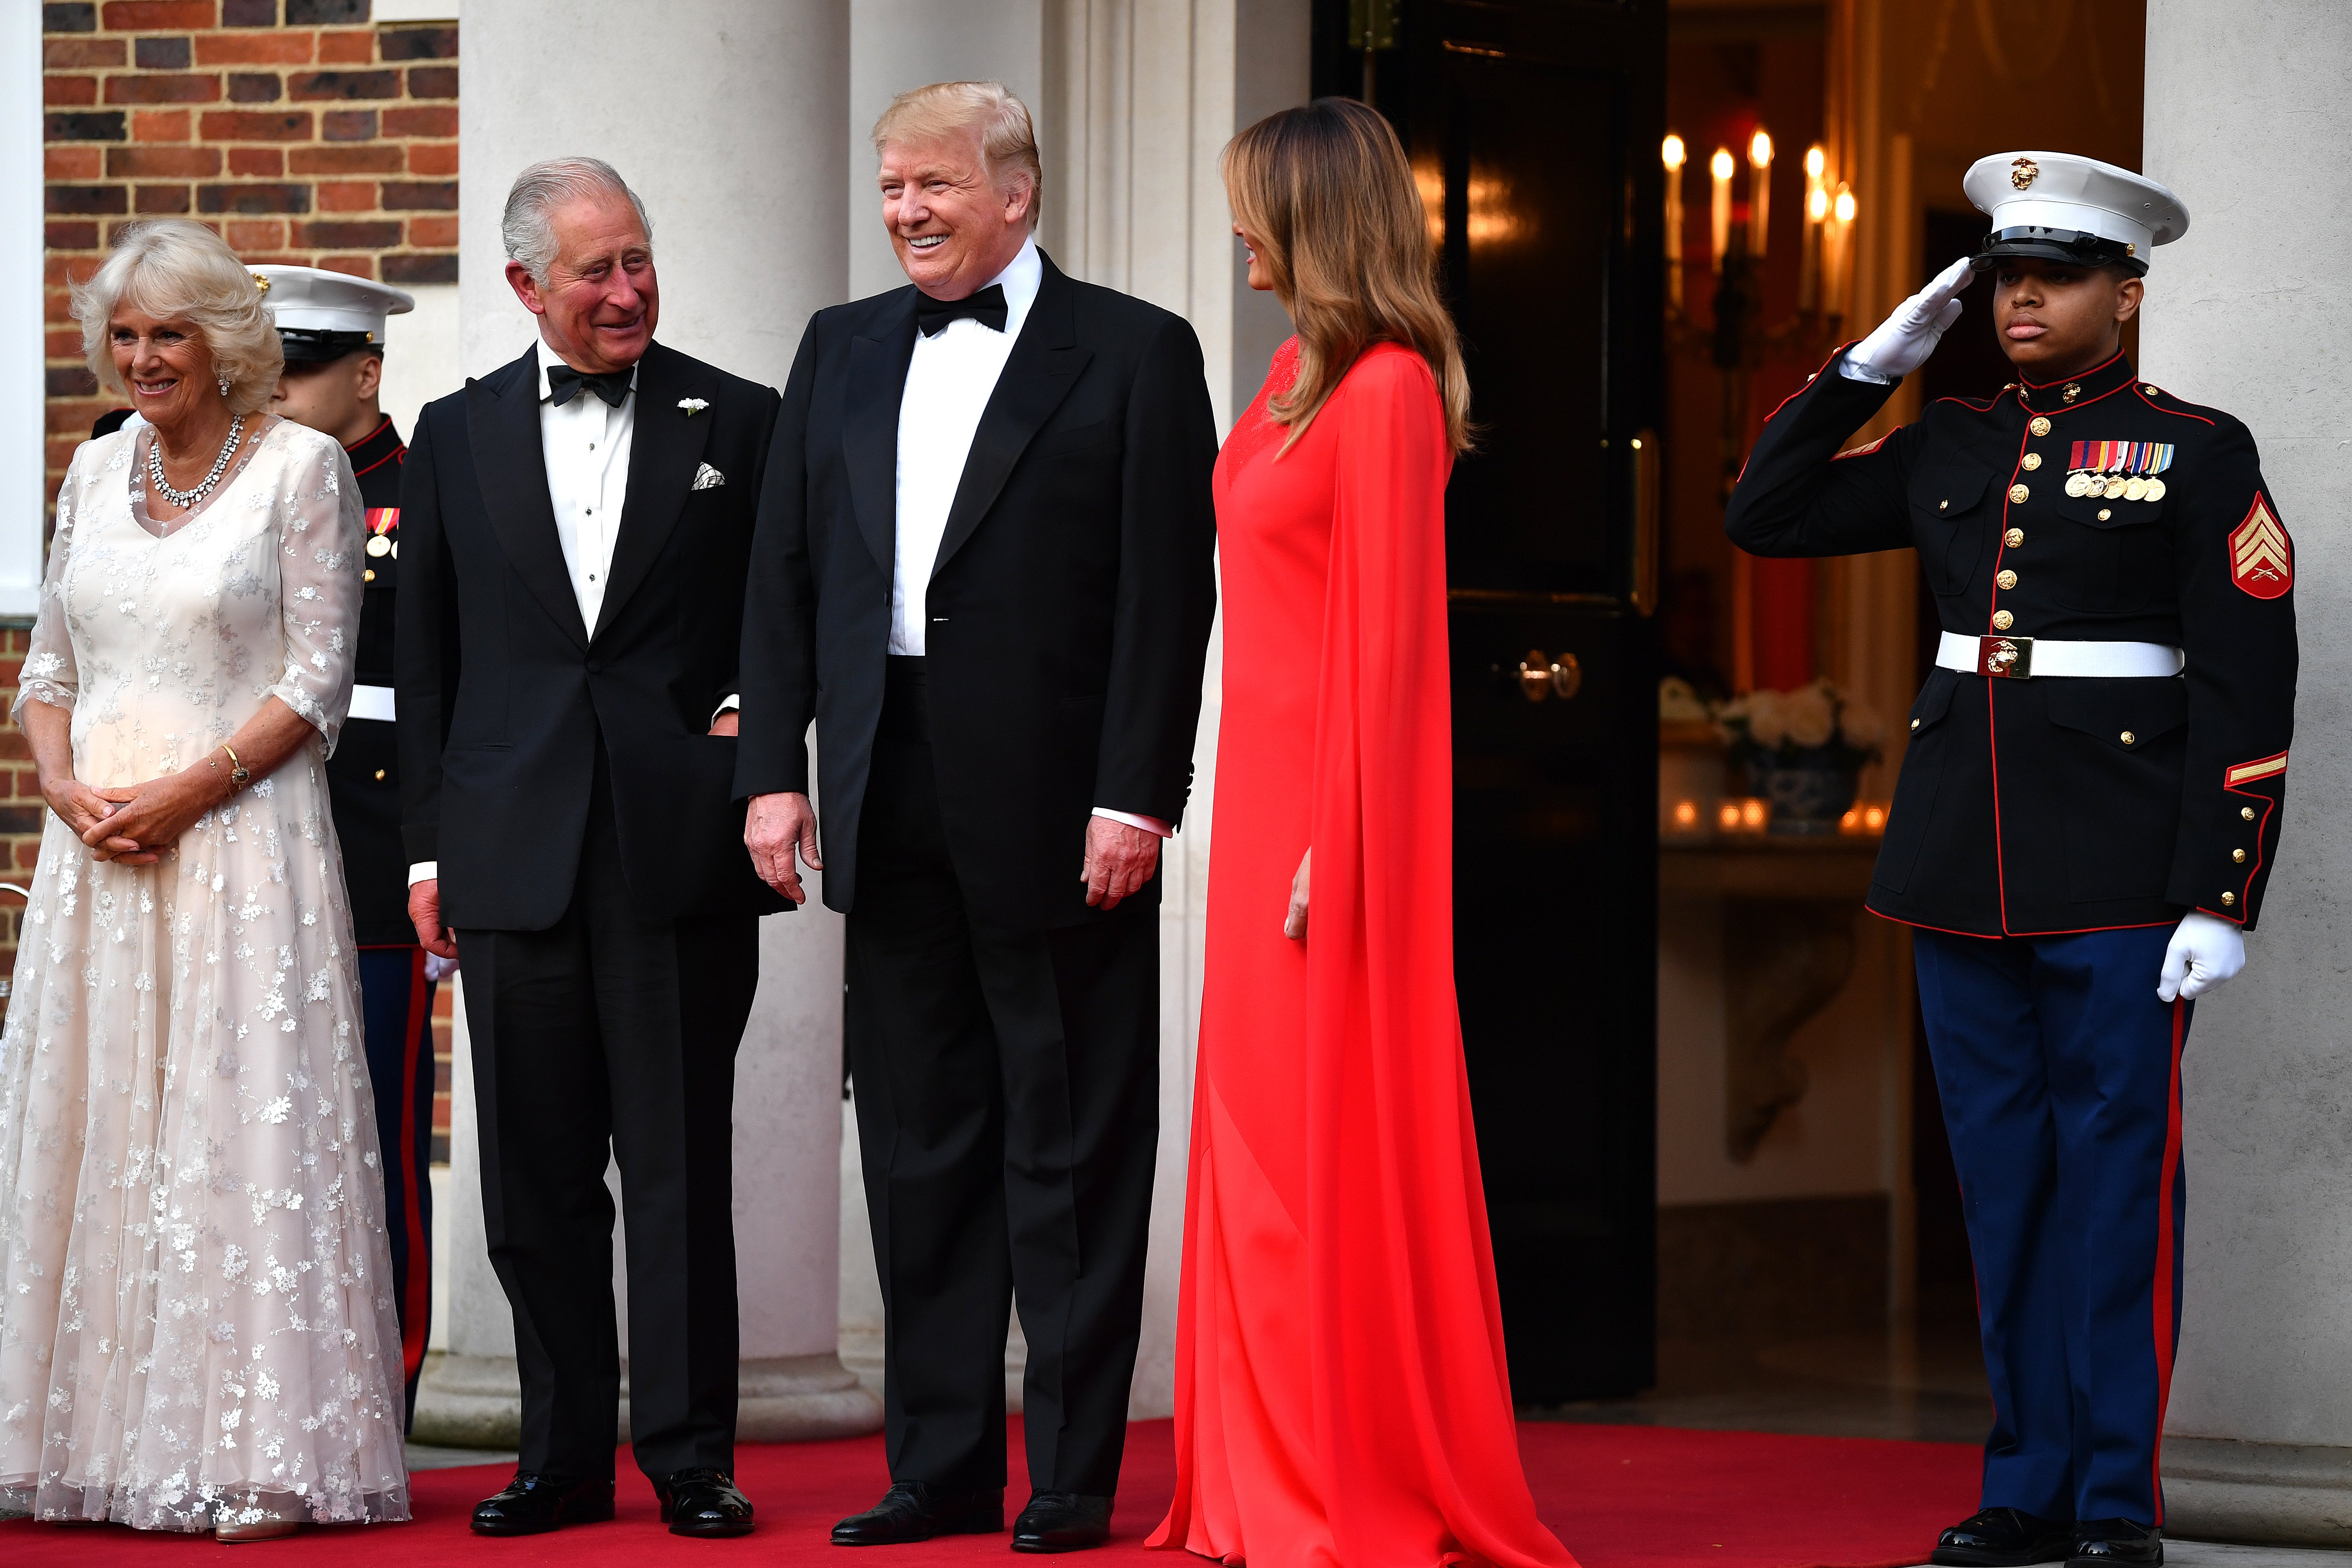 Charles and Camilla alongside Donald Trump and Melania Trump, London, June 2019